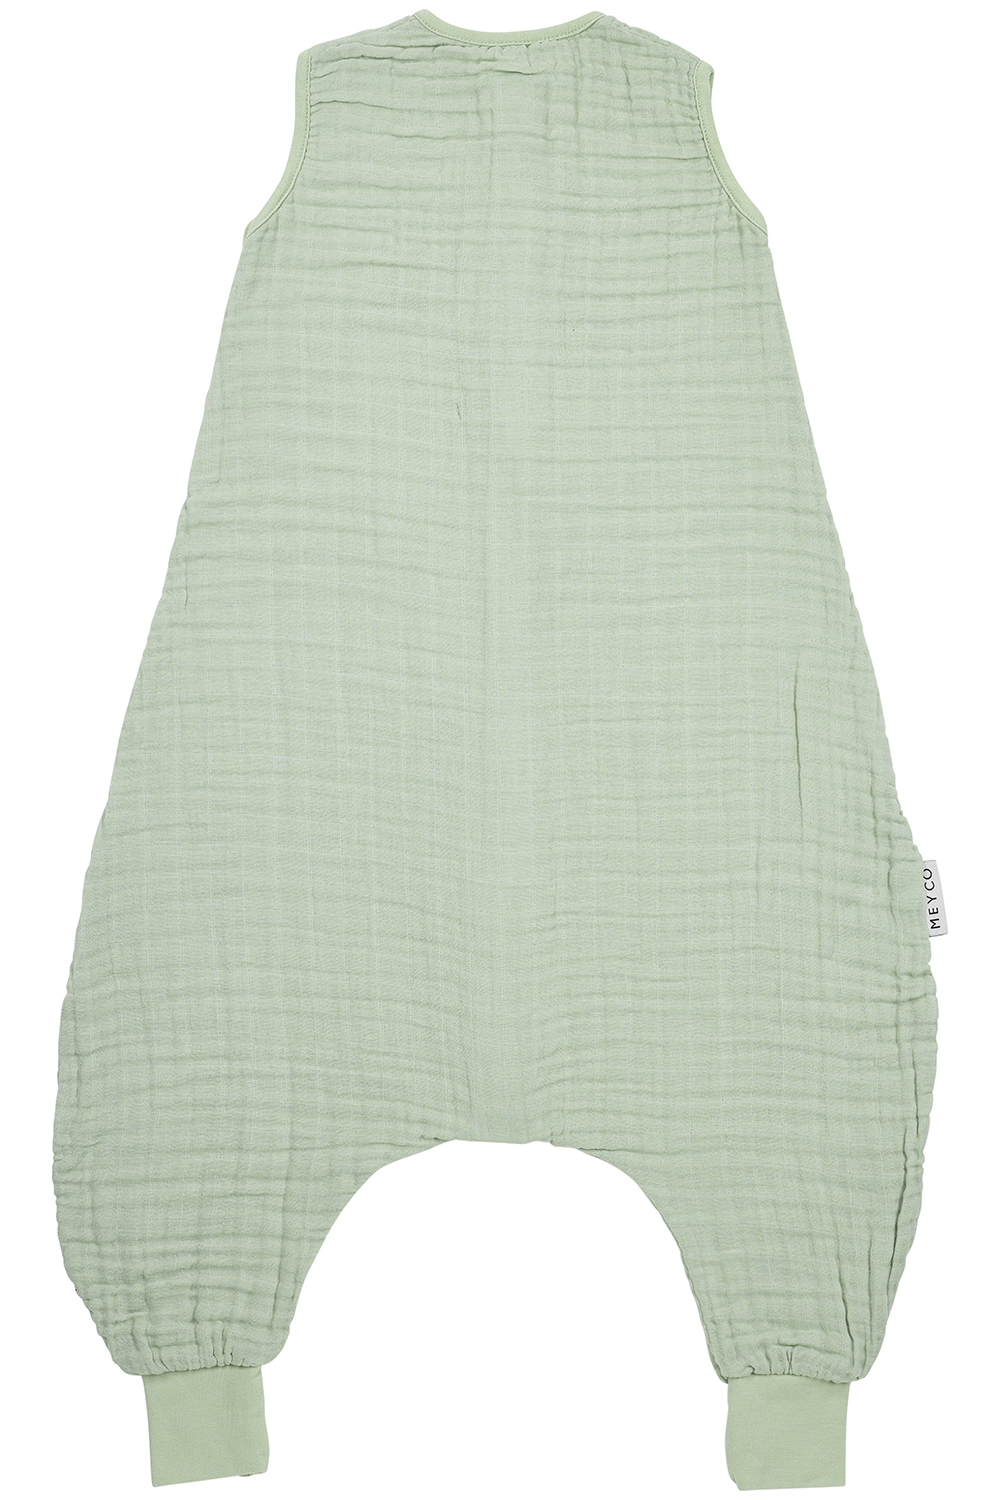 Baby summer sleep overall jumper pre-washed muslin Uni - soft green - 80cm